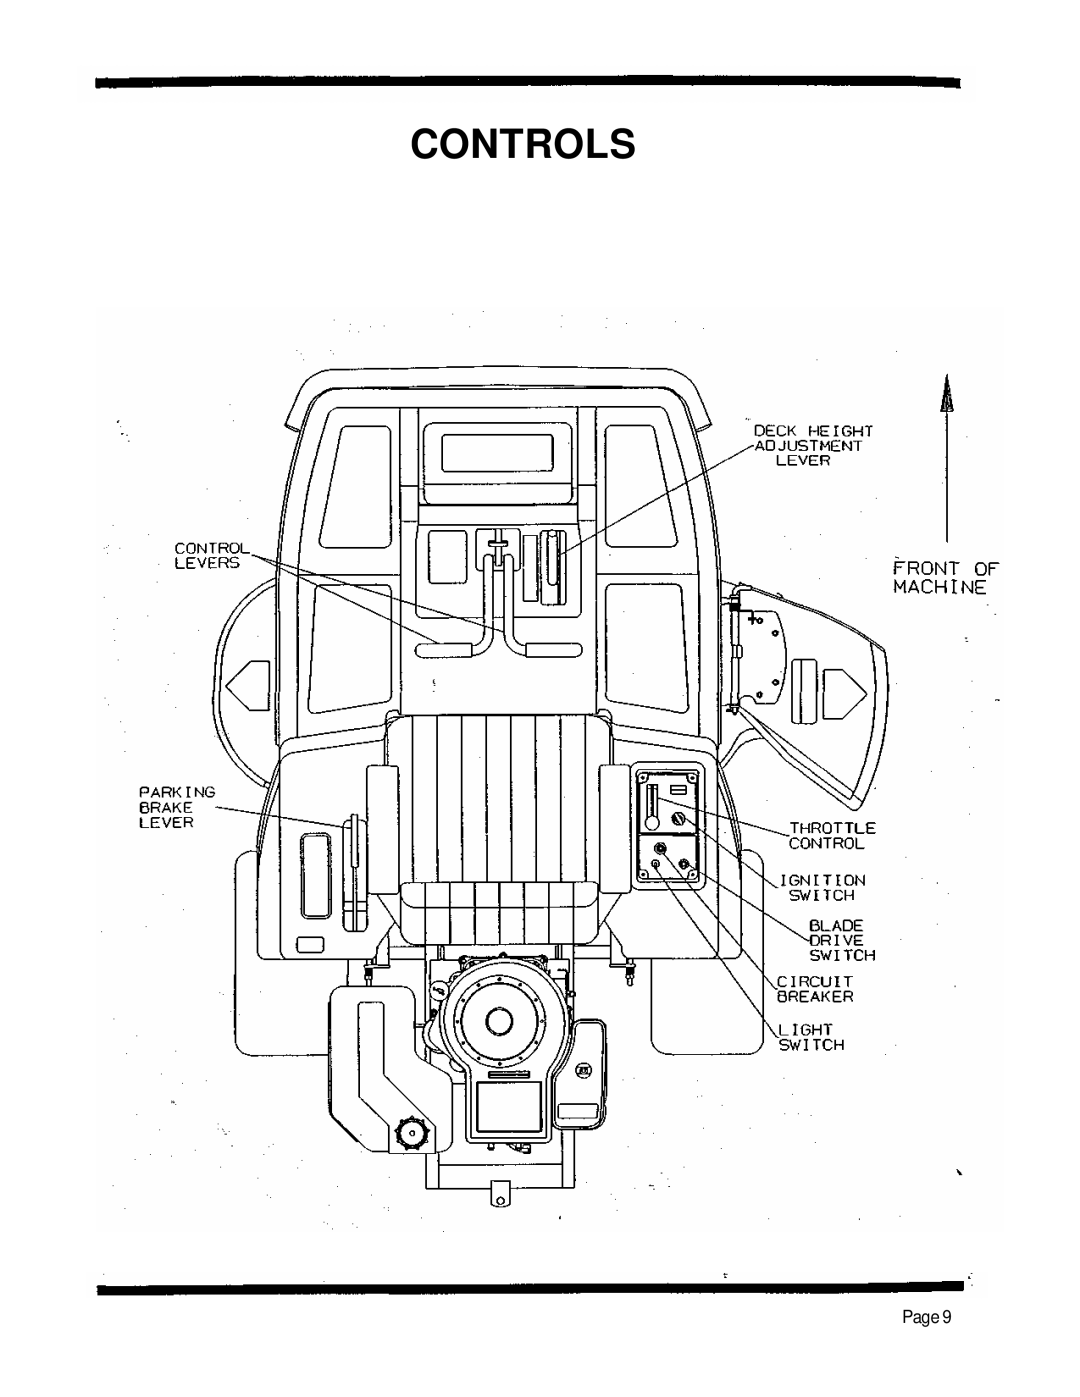 Dixon 4000 Series manual Controls, Page 